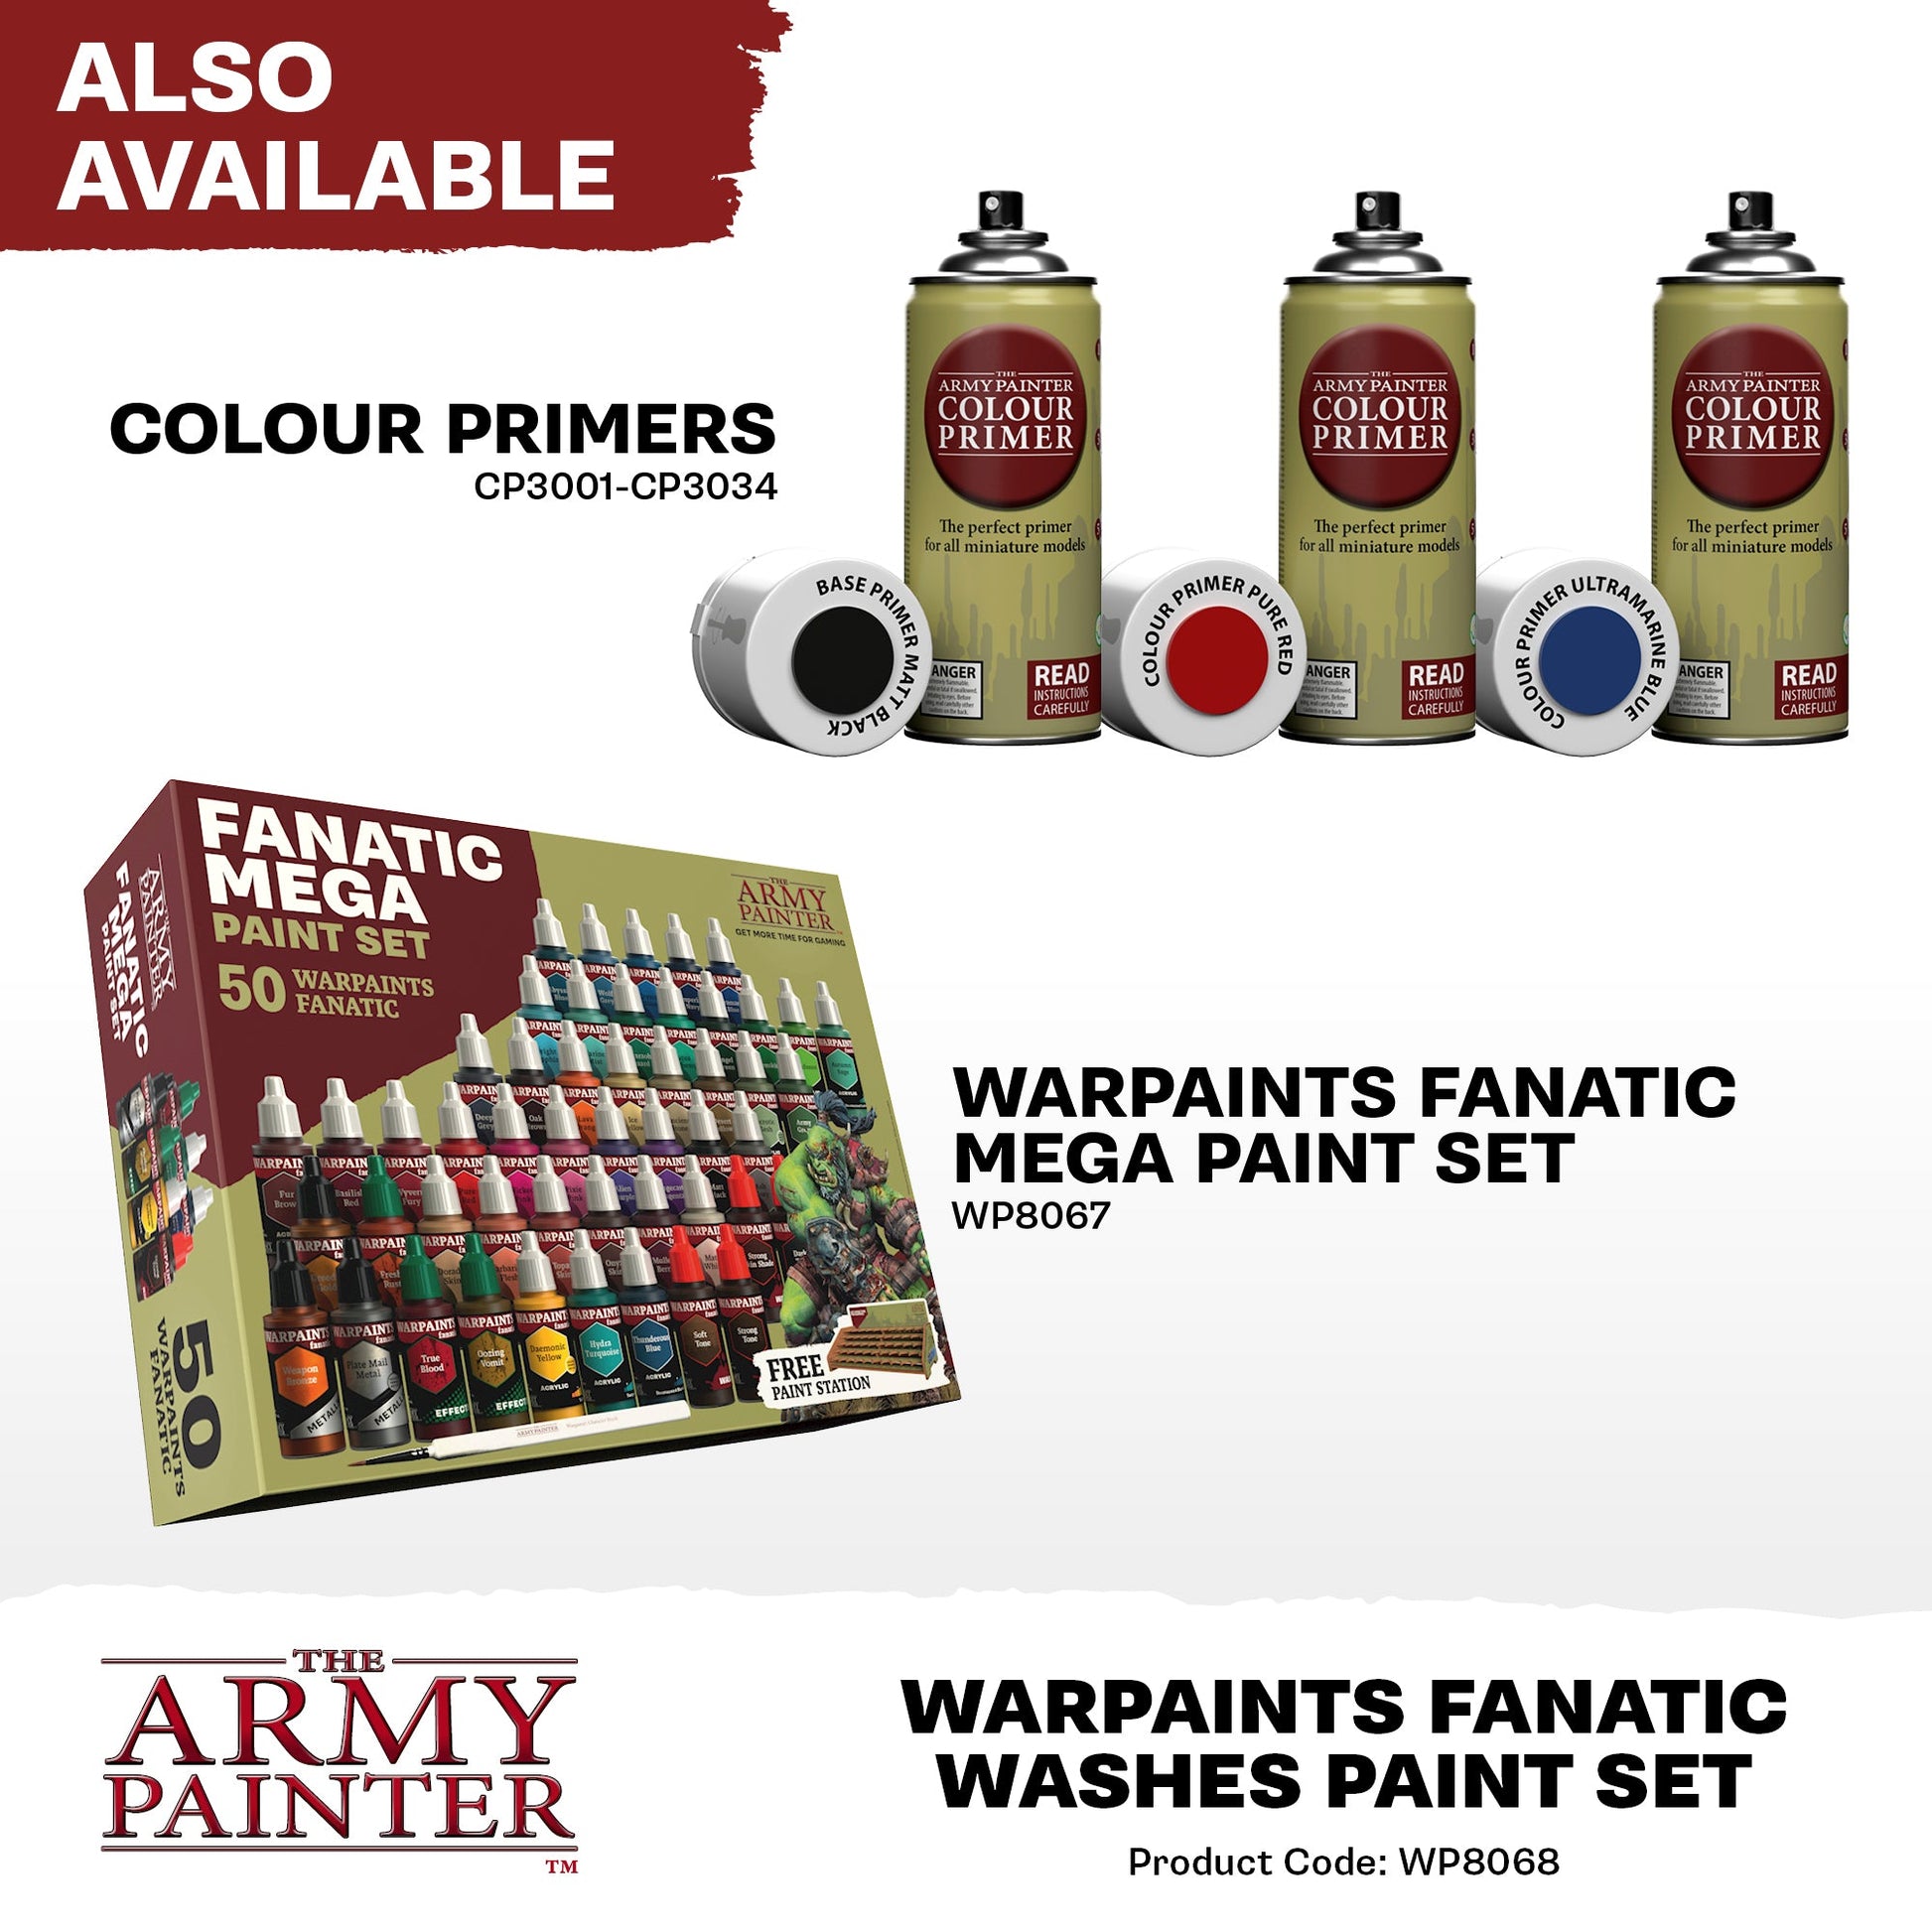 The Army Painter Warpaints Fanatic: Washes Paint Set